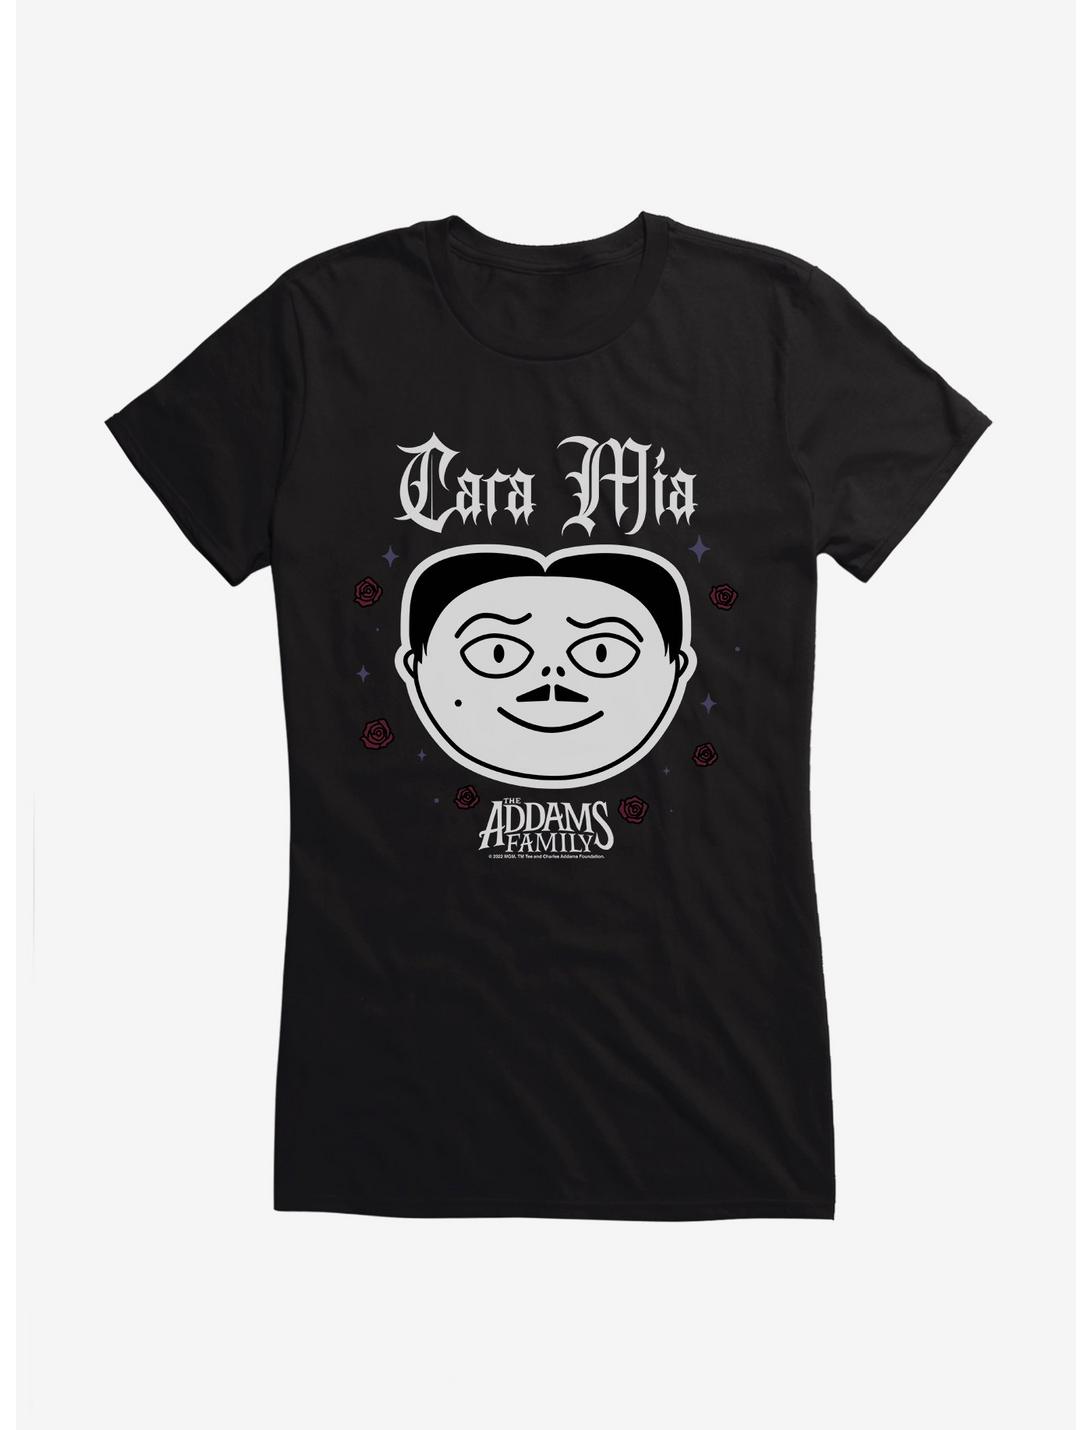 Addams Family Movie Cara Mia Girls T-Shirt, BLACK, hi-res